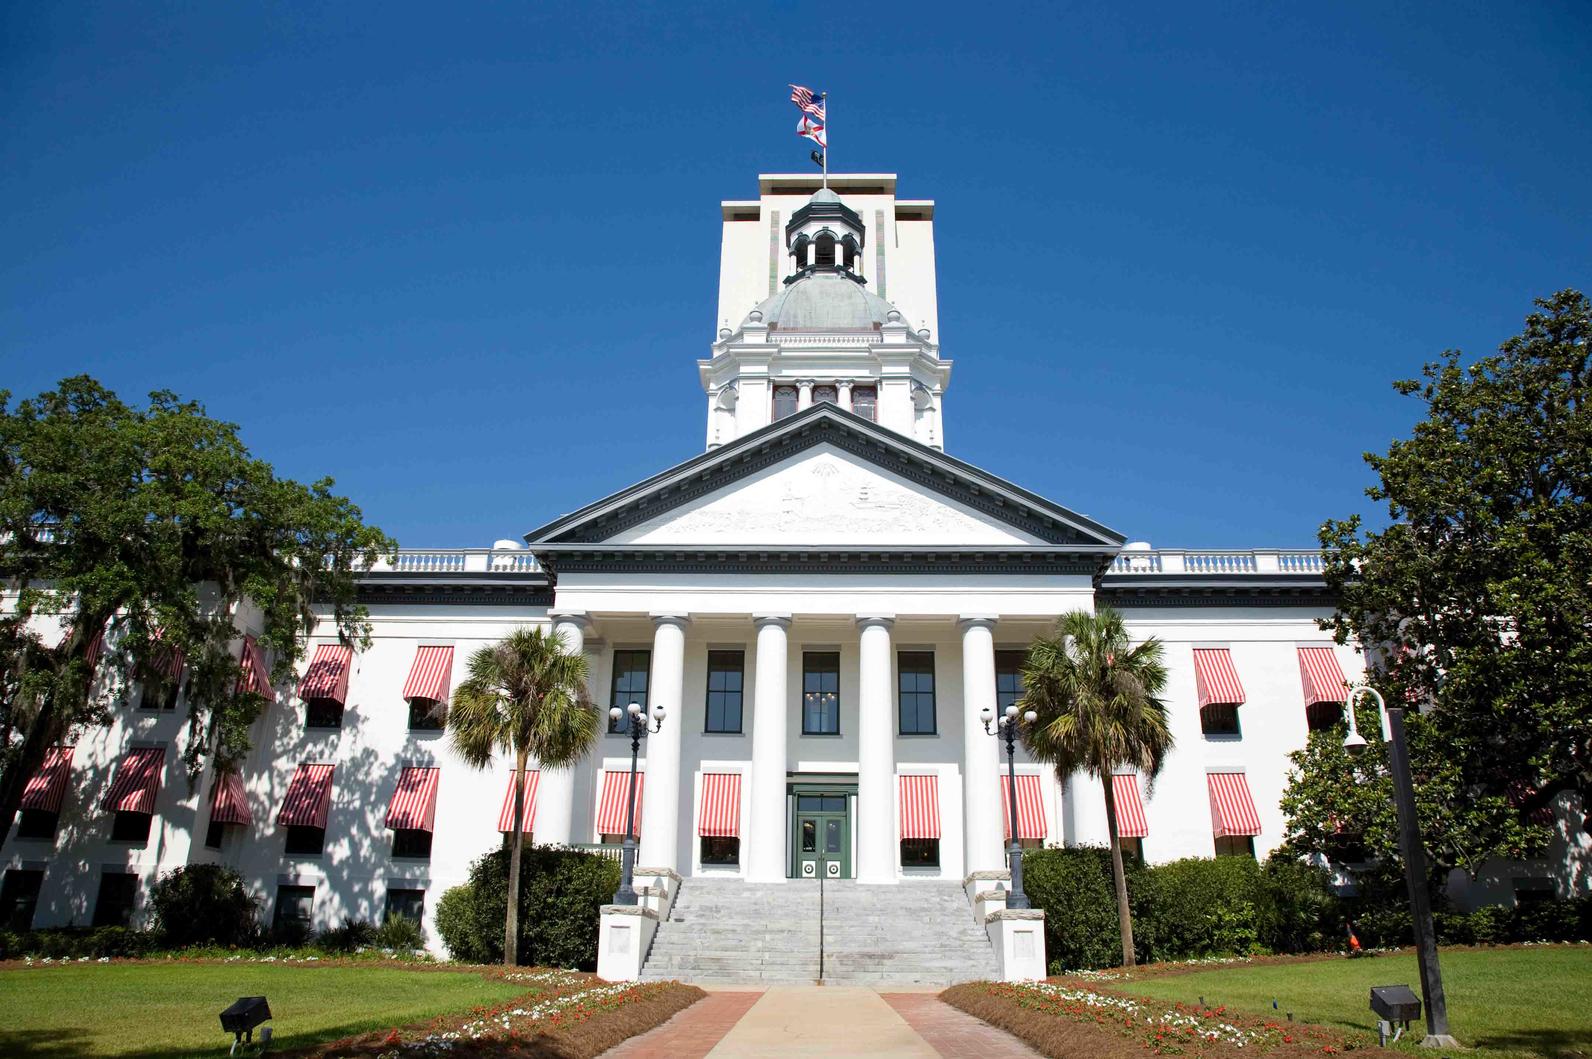 Florida's capitol building